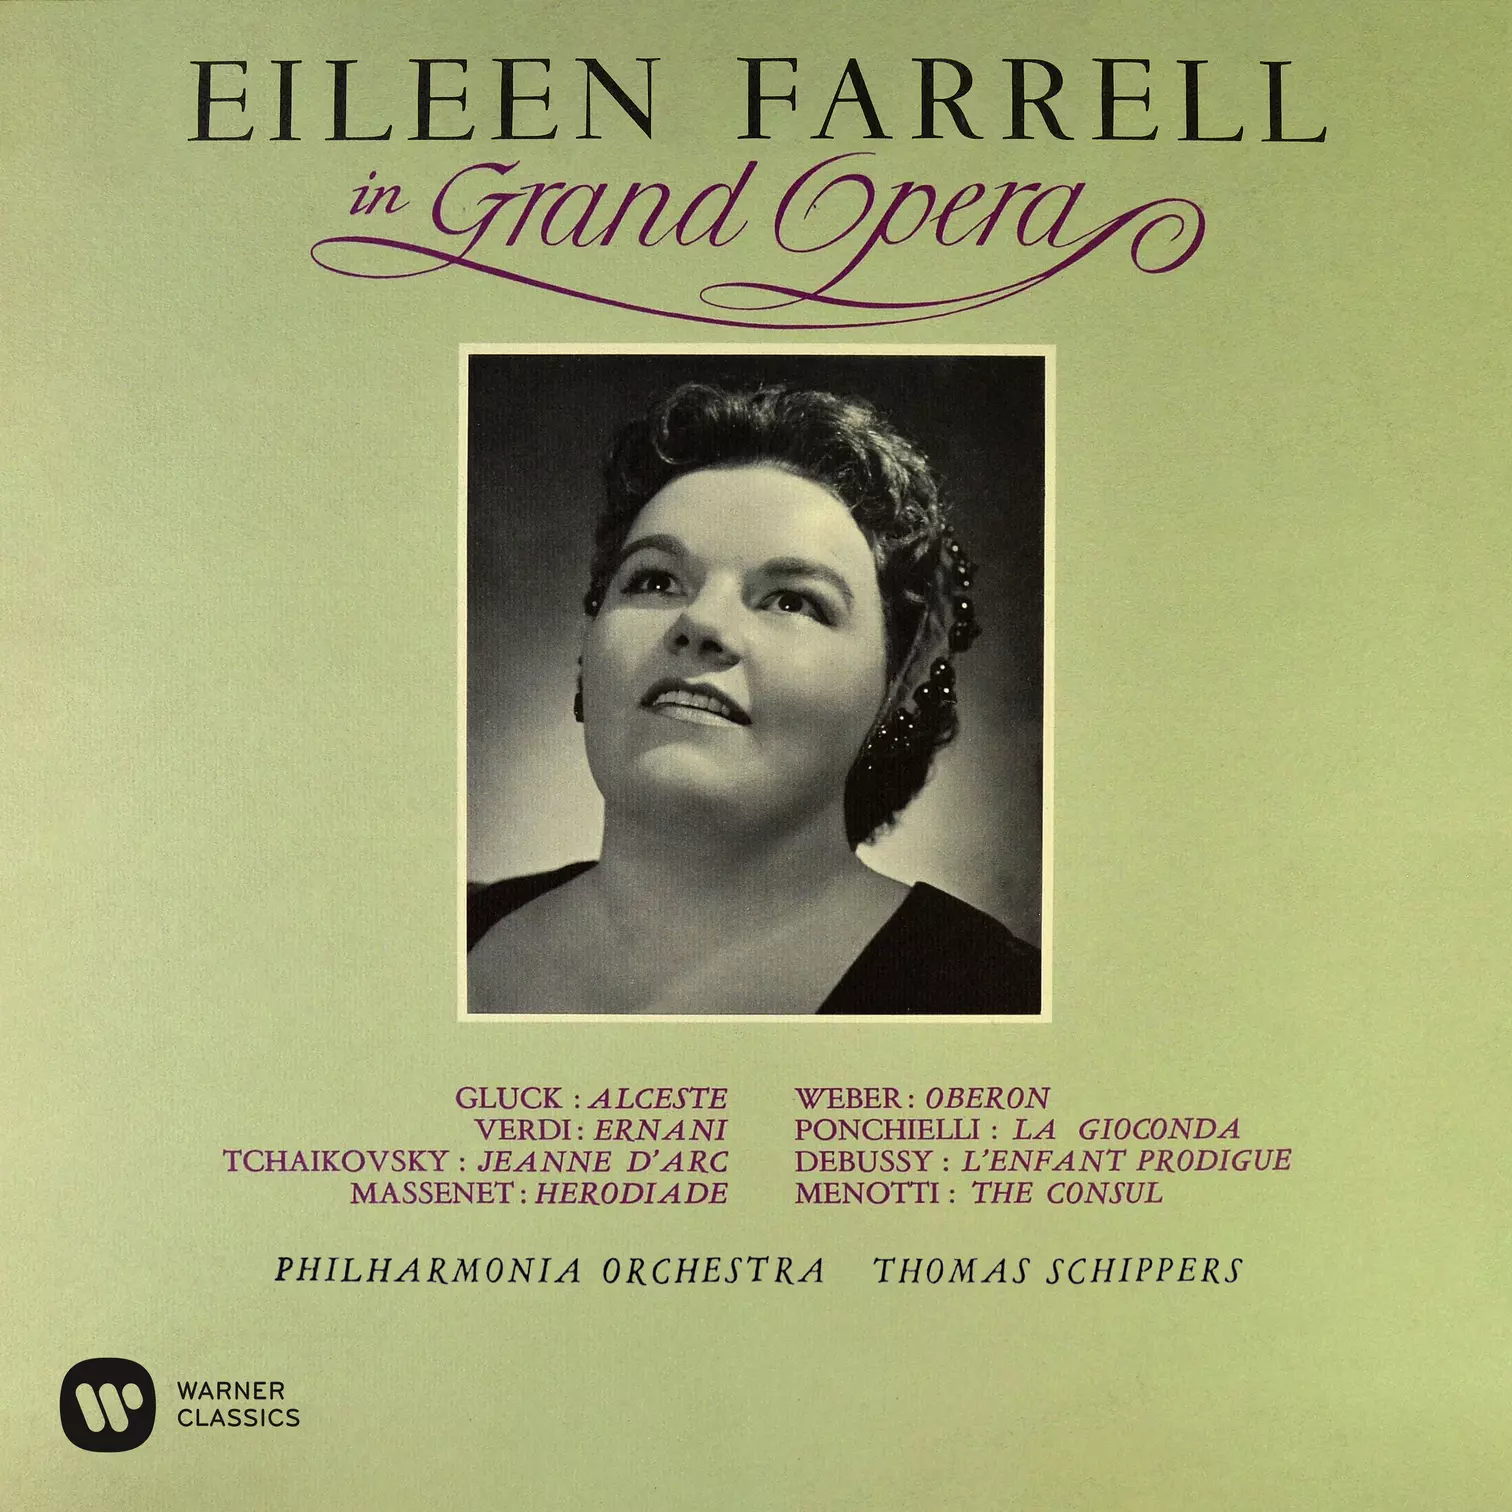 Eileen Farrell in Grand Opera